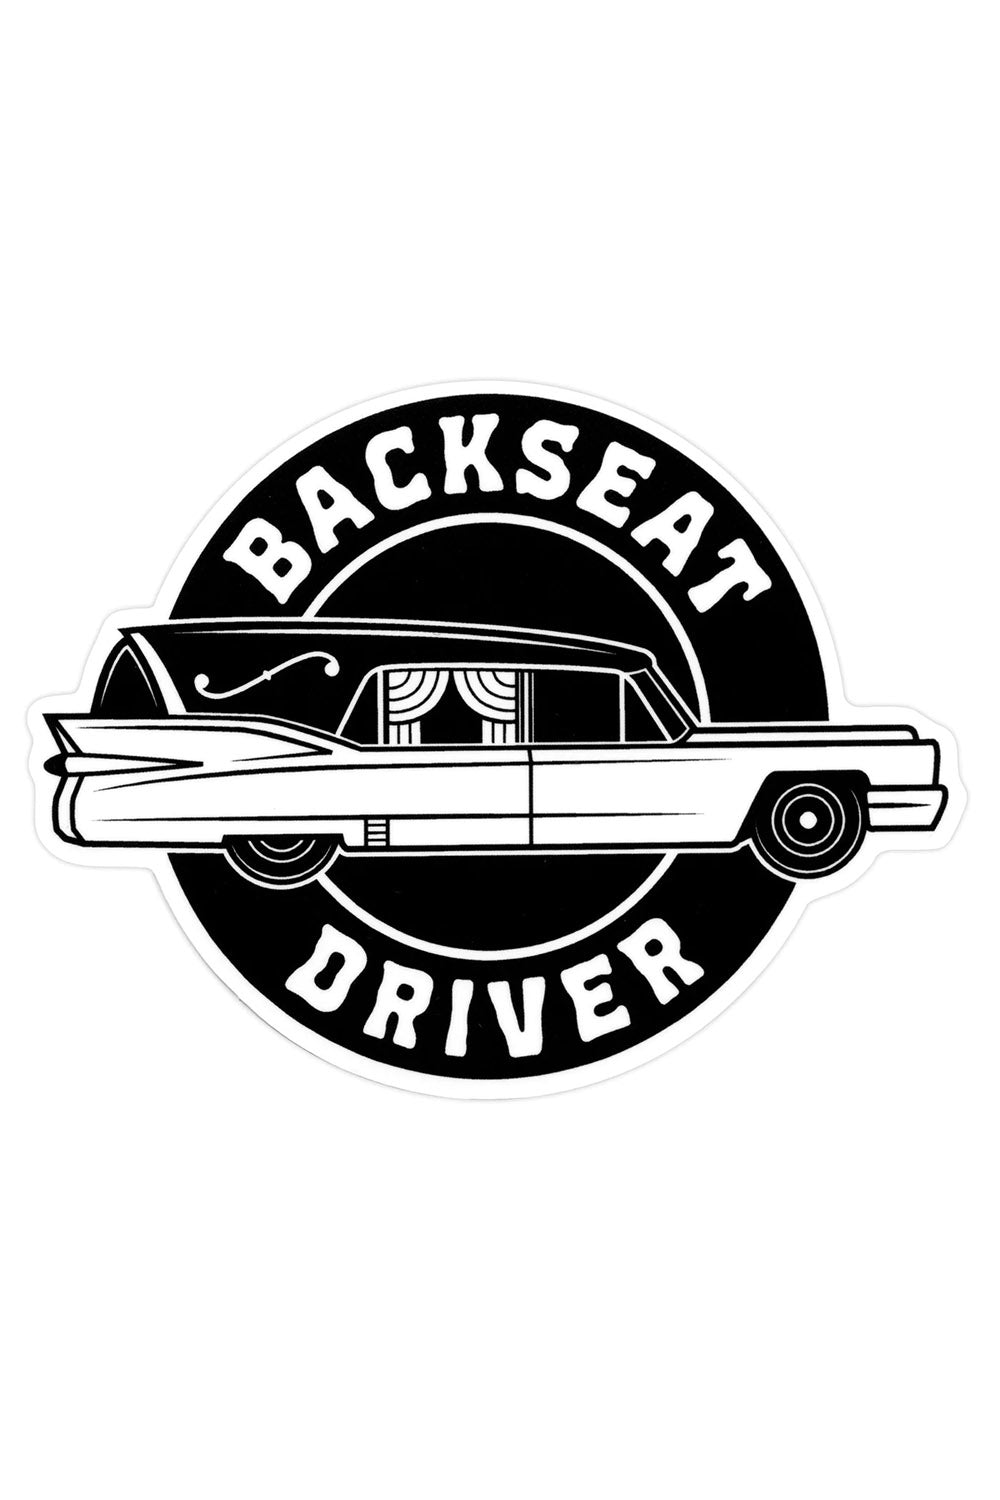 Backseat Driver Sticker